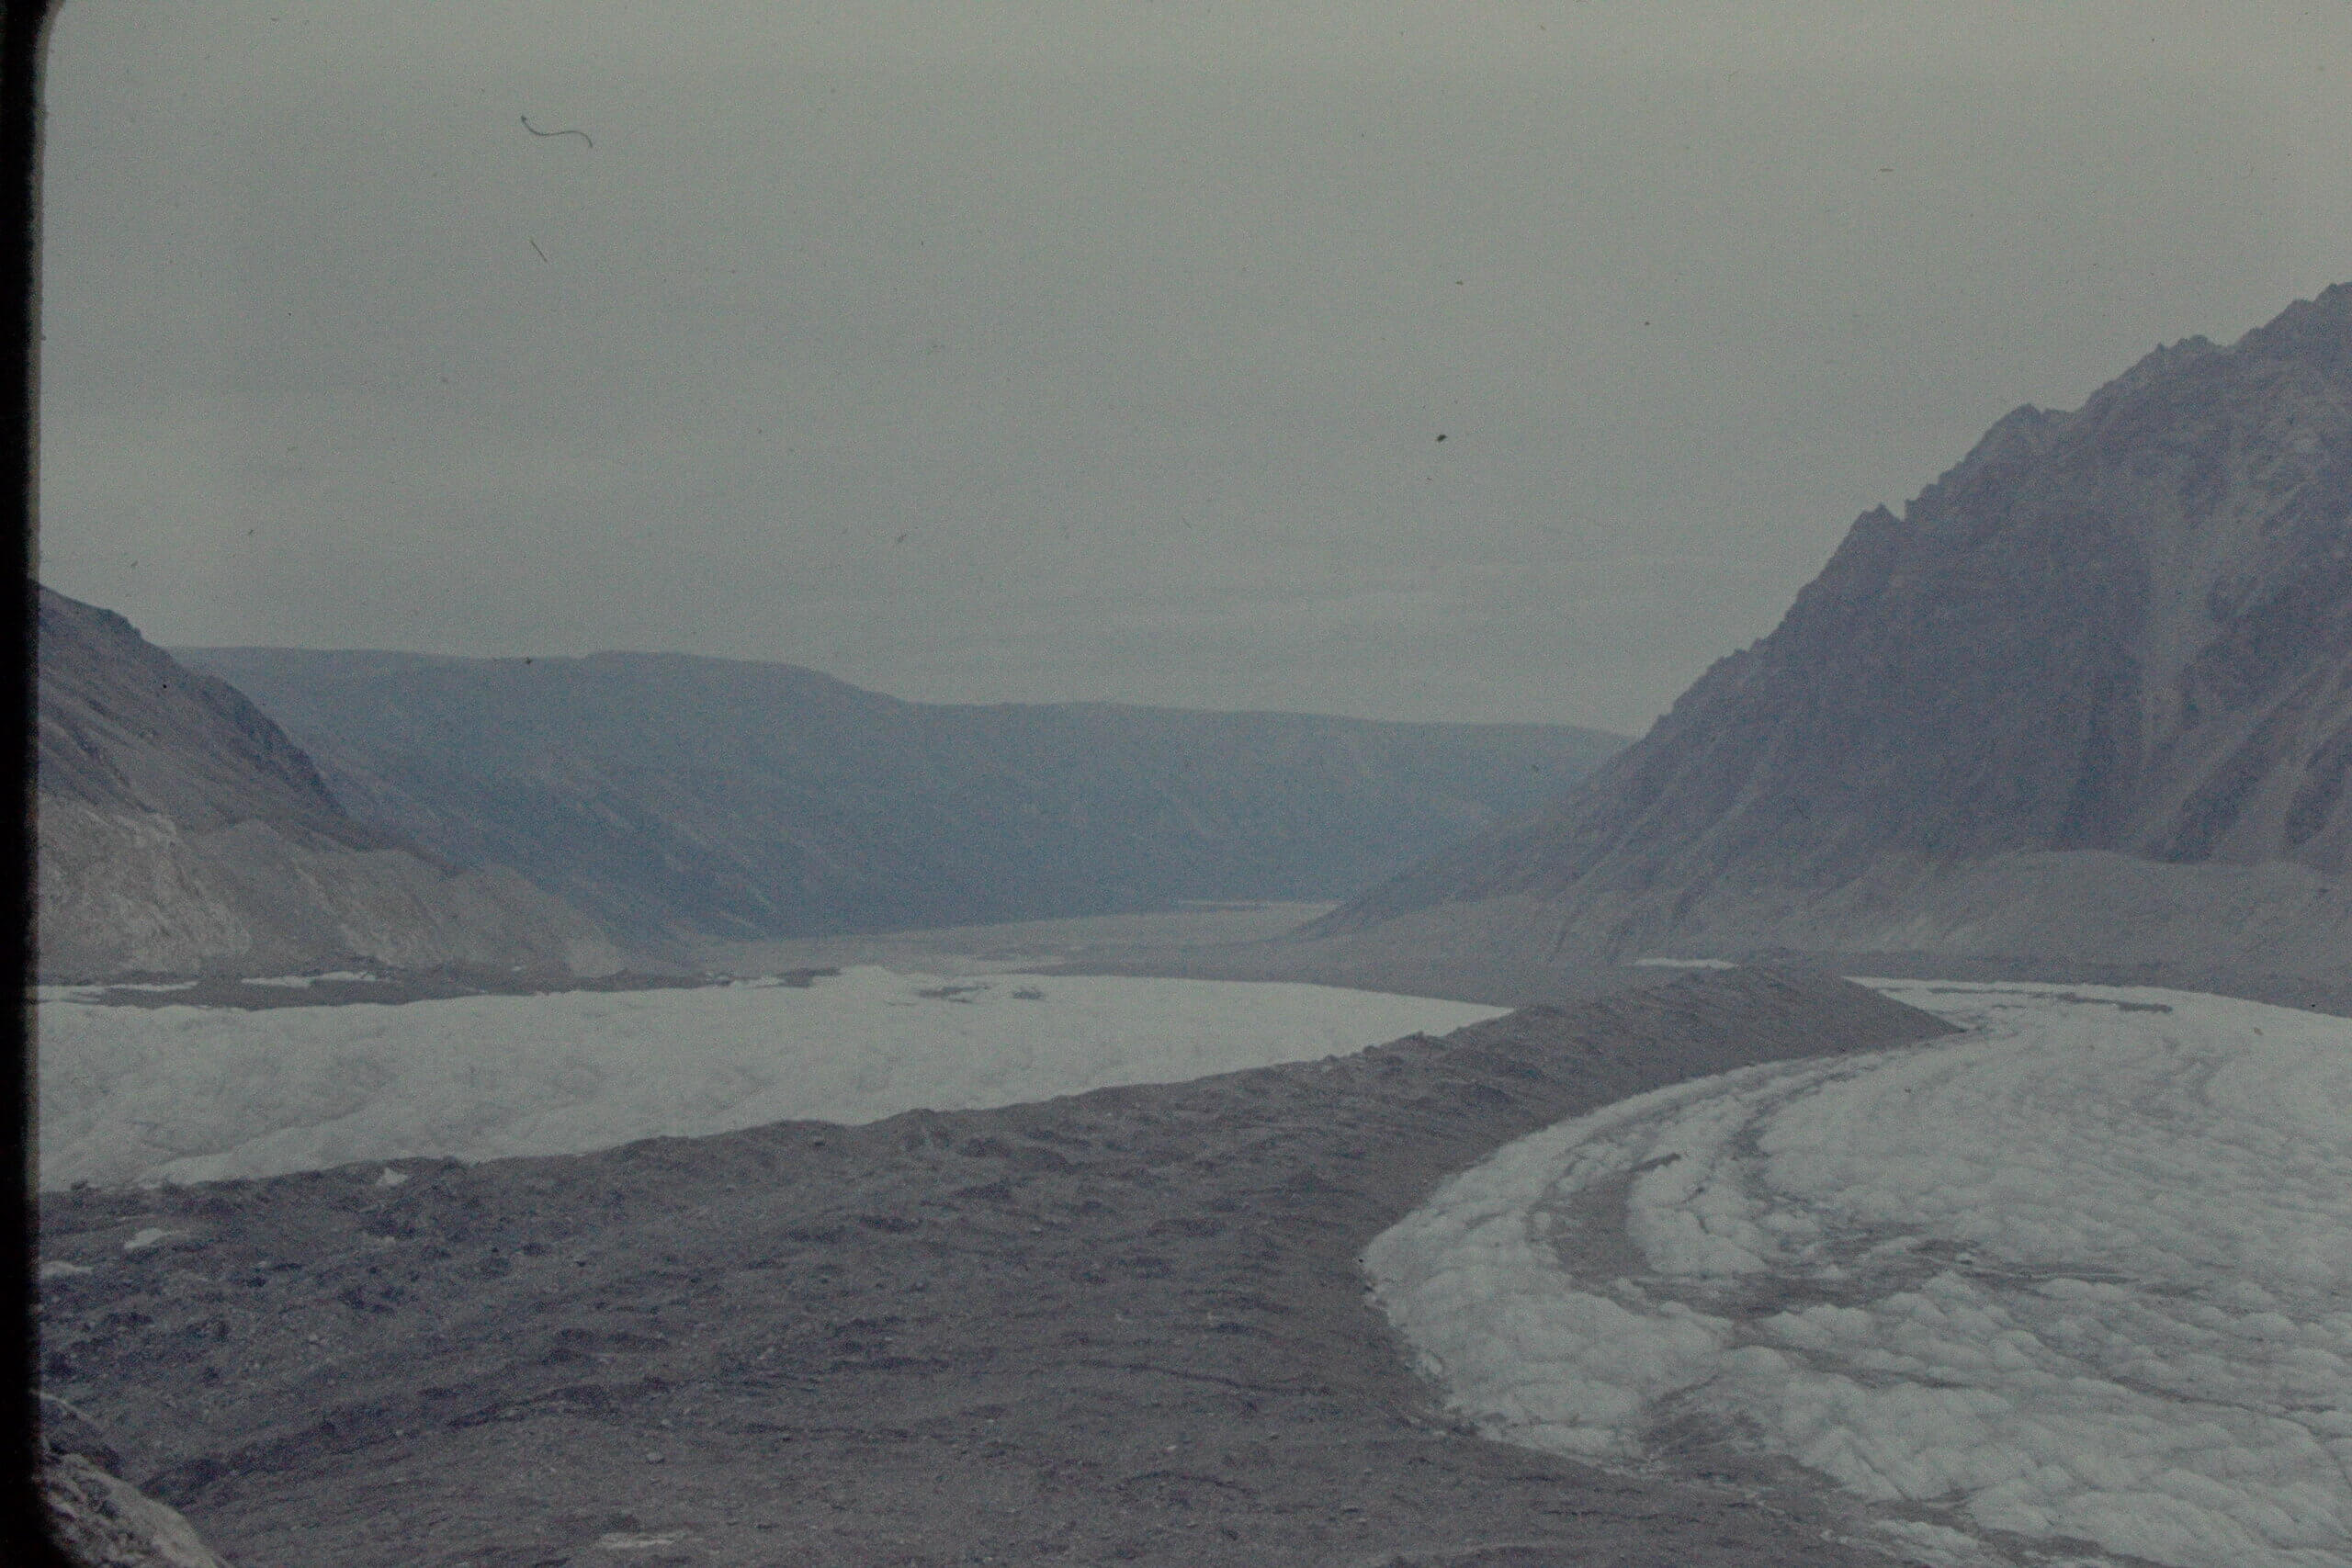 Looking north towards the base of Gerstle Glacier 